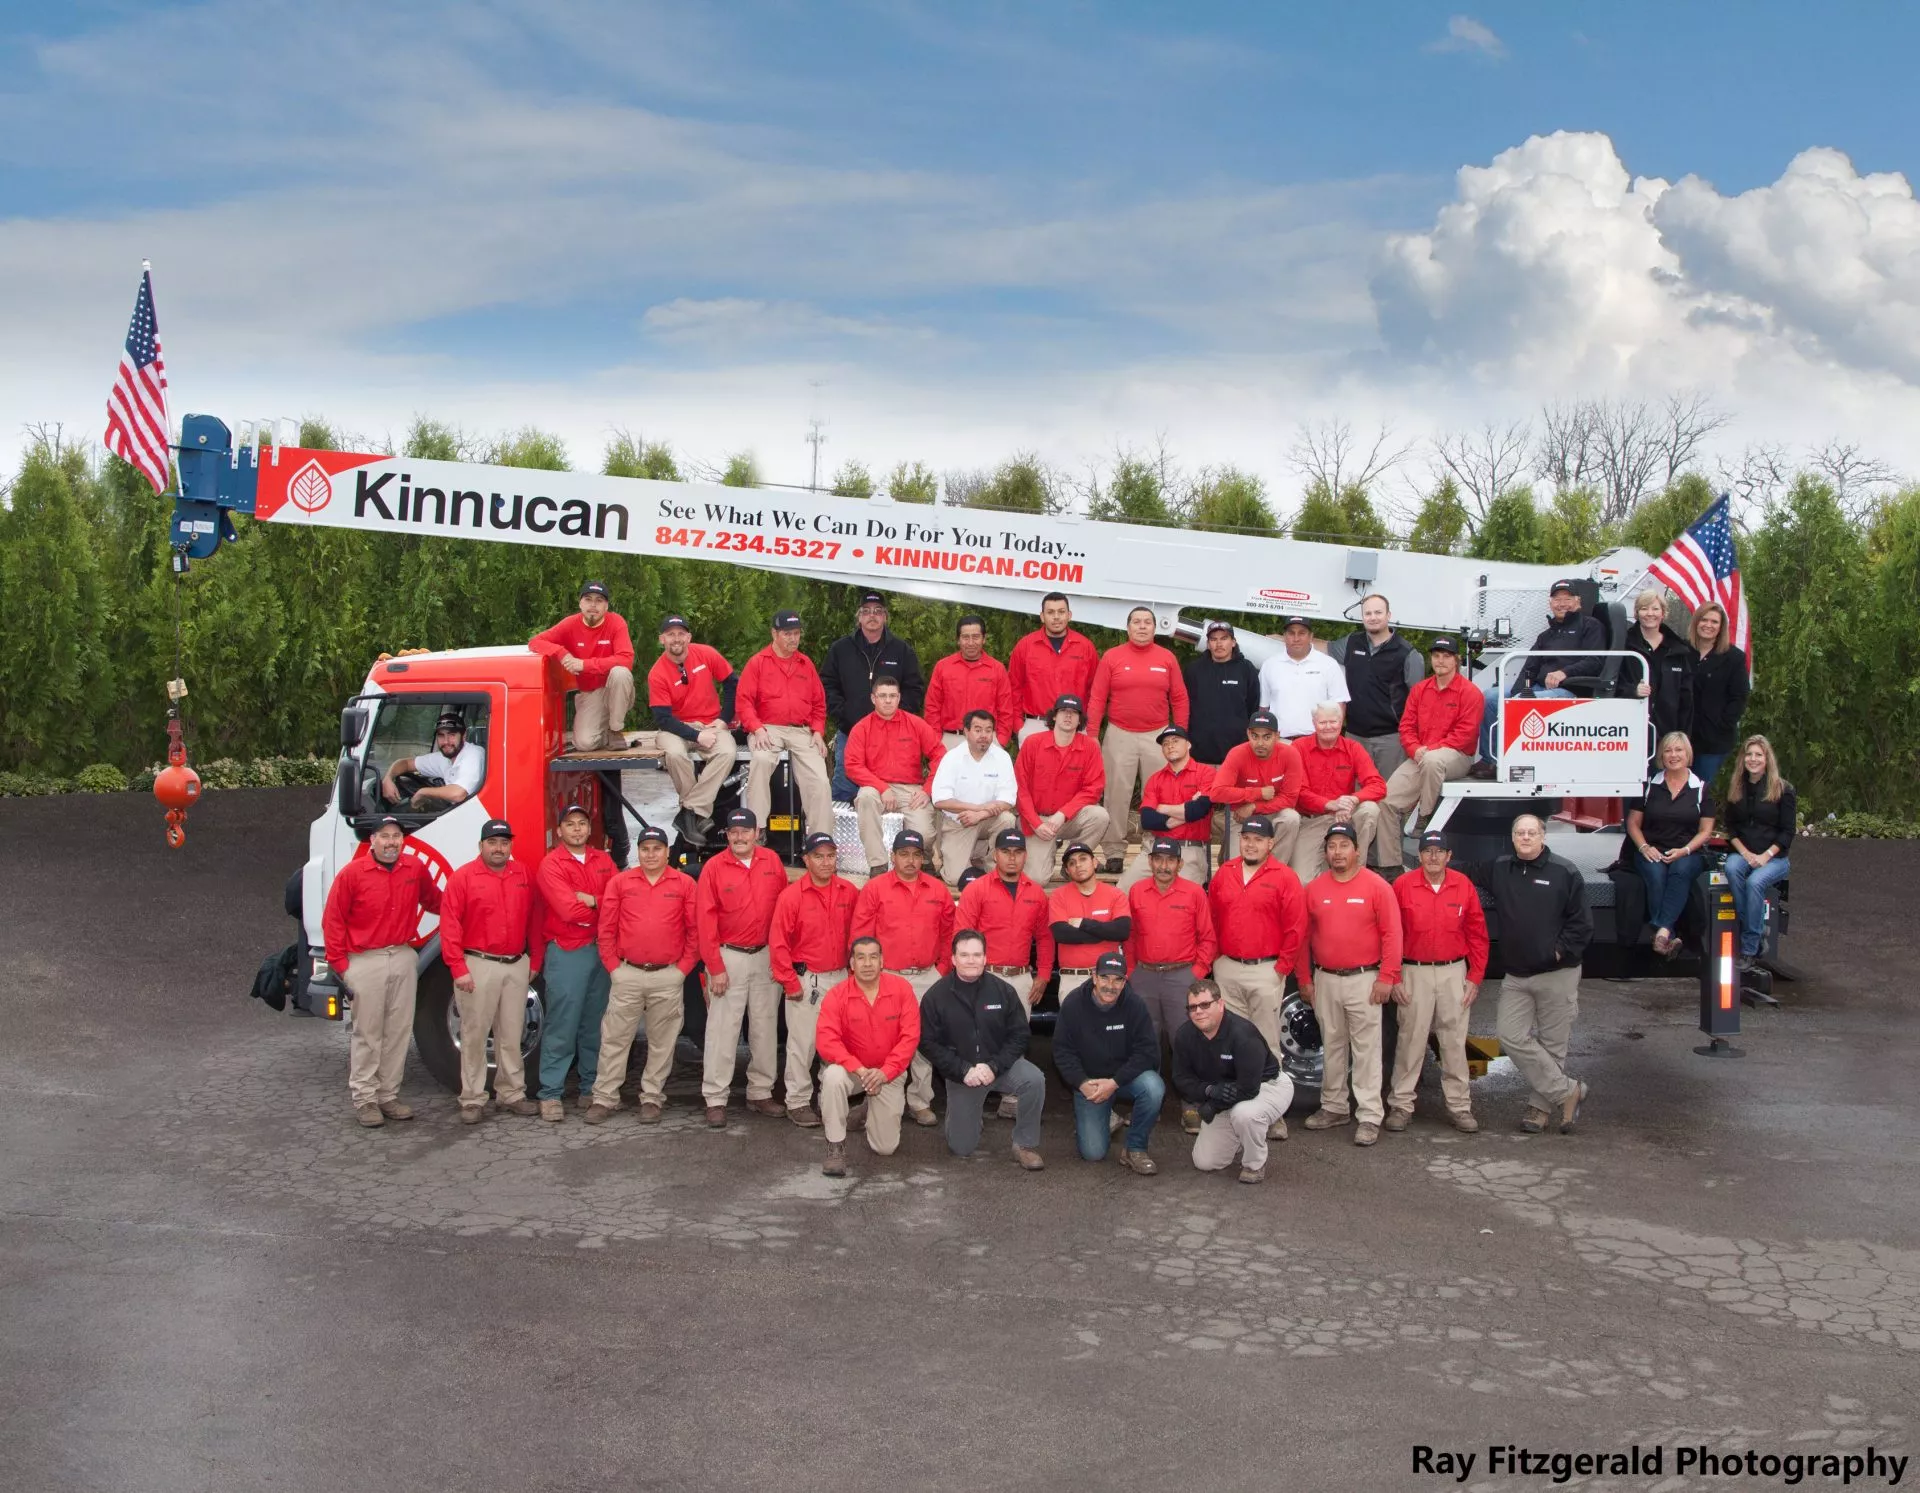 All company photo with Kinnucan Kinnucrane.